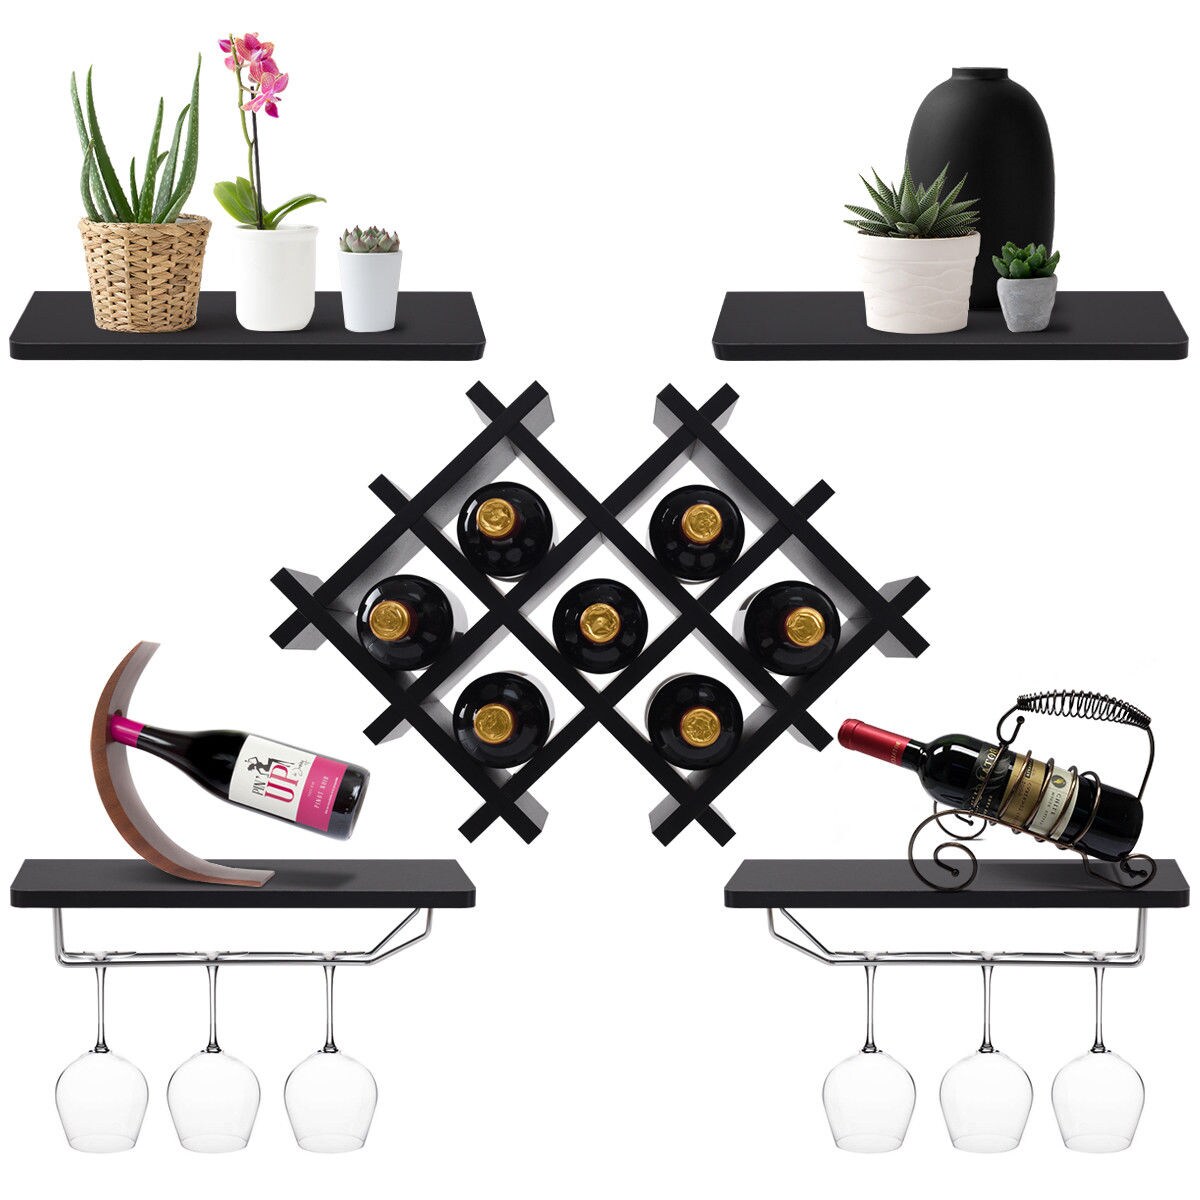 Gymax Set of 5 Wall Mount Wine Rack Set Storage Shelves and Glass Holder Black